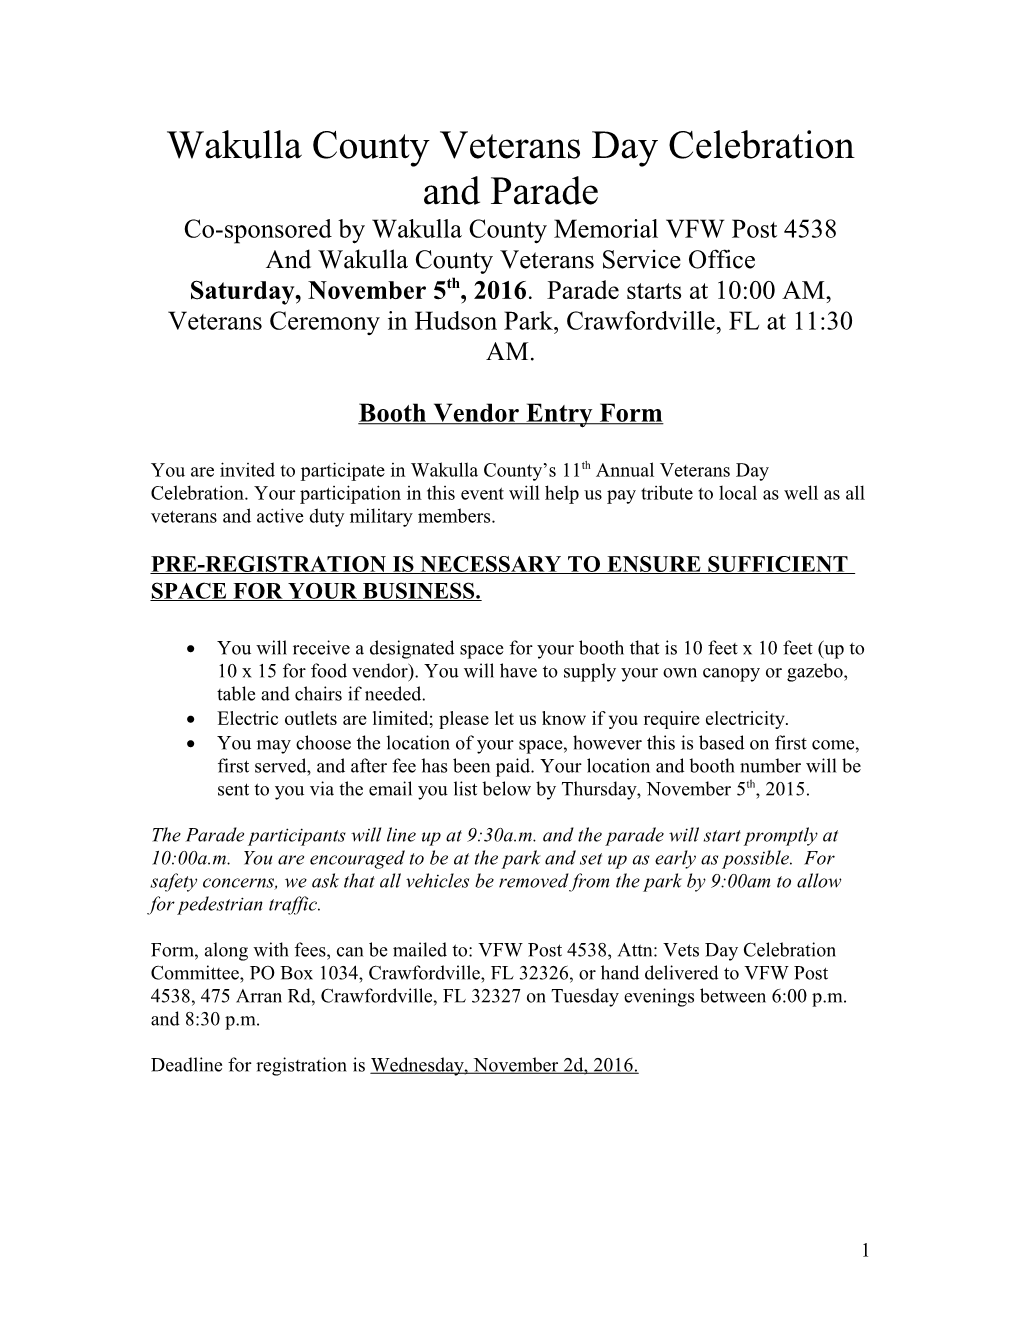 Wakulla County Veterans Day Celebration and Parade